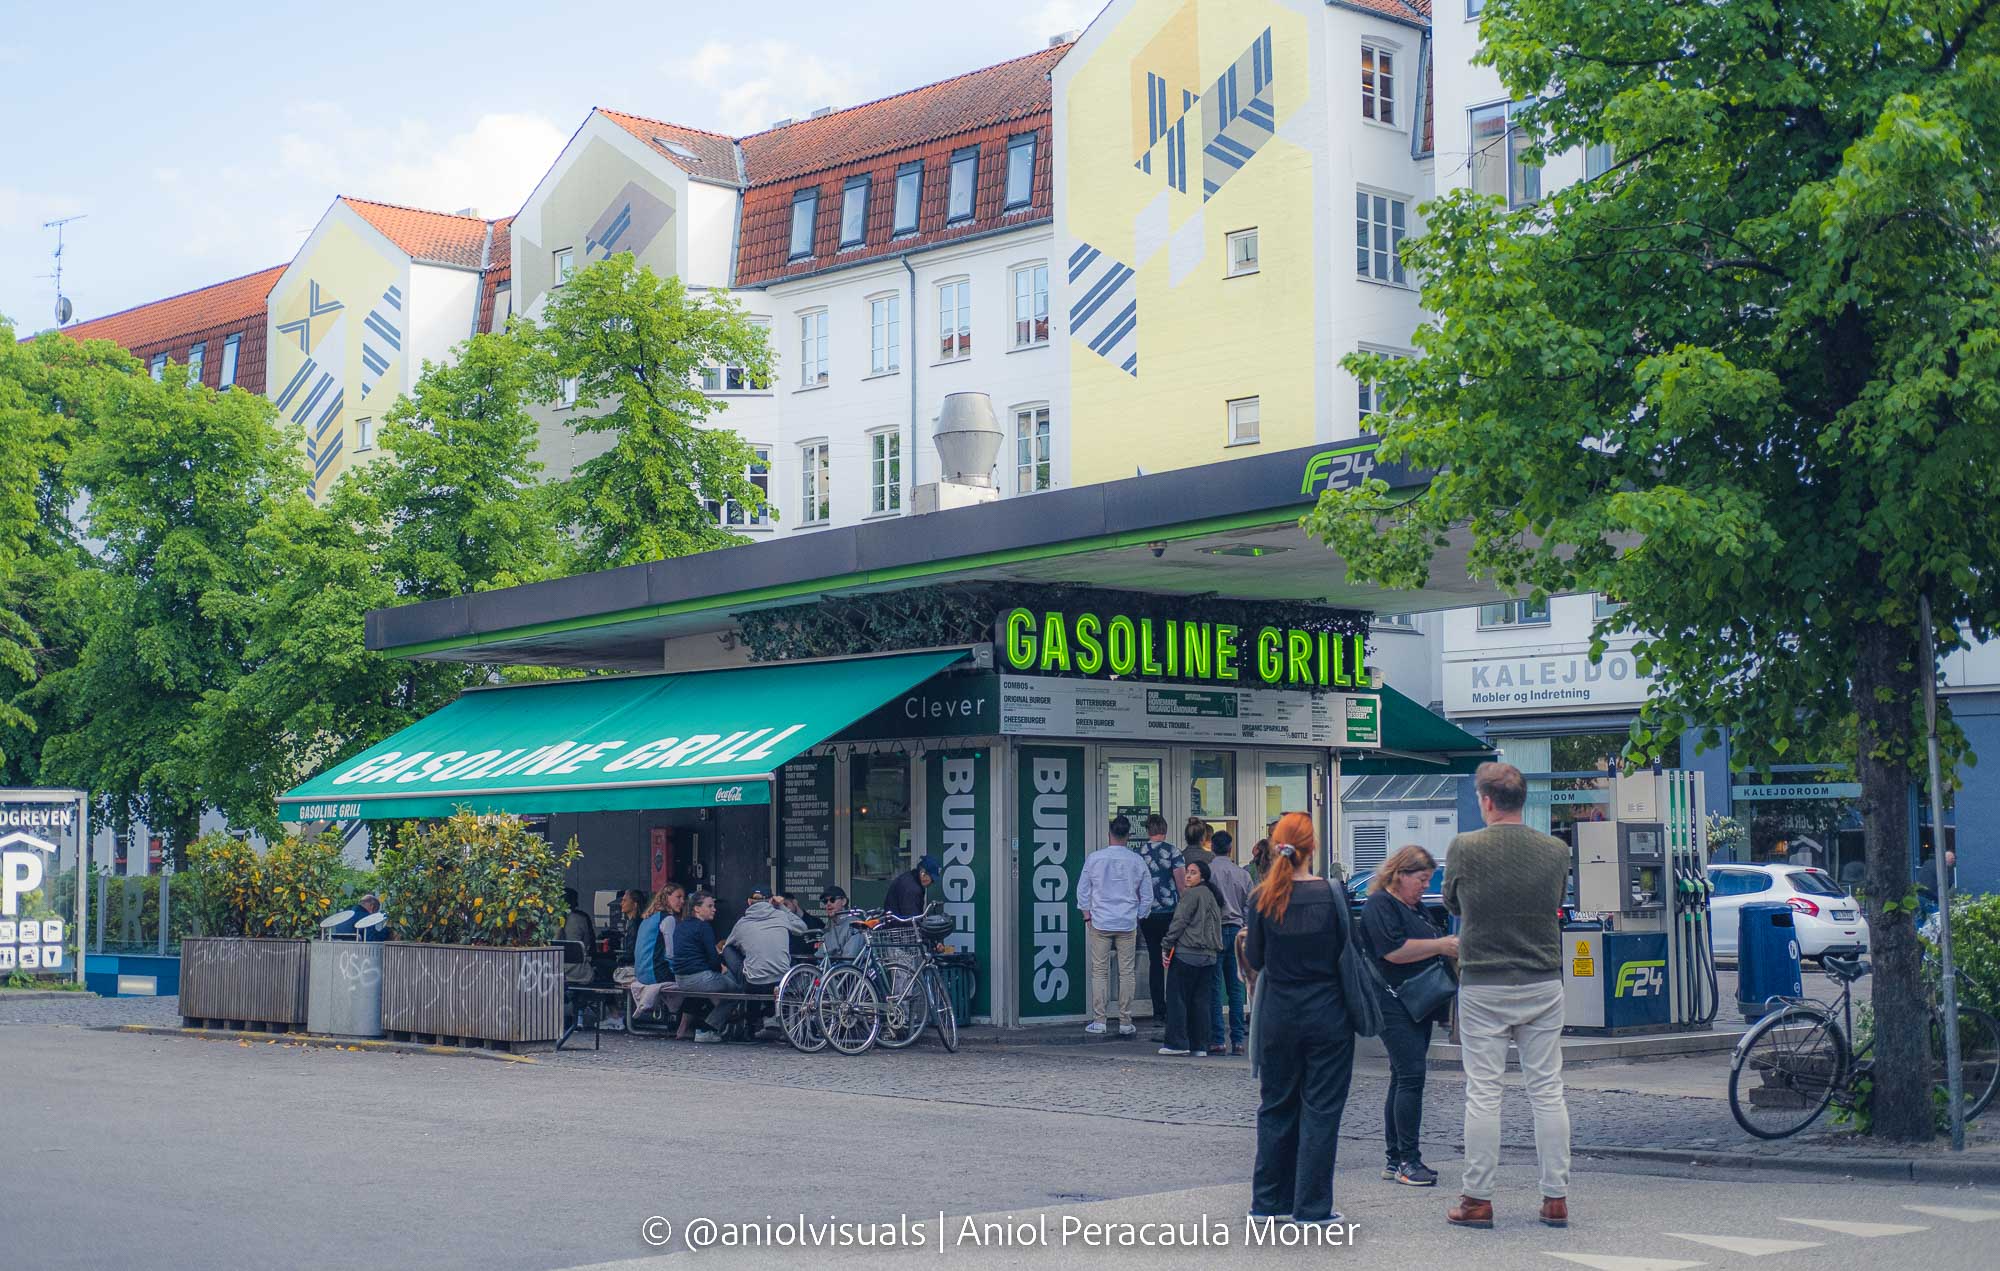 Copenhagen gasoline grill original shop